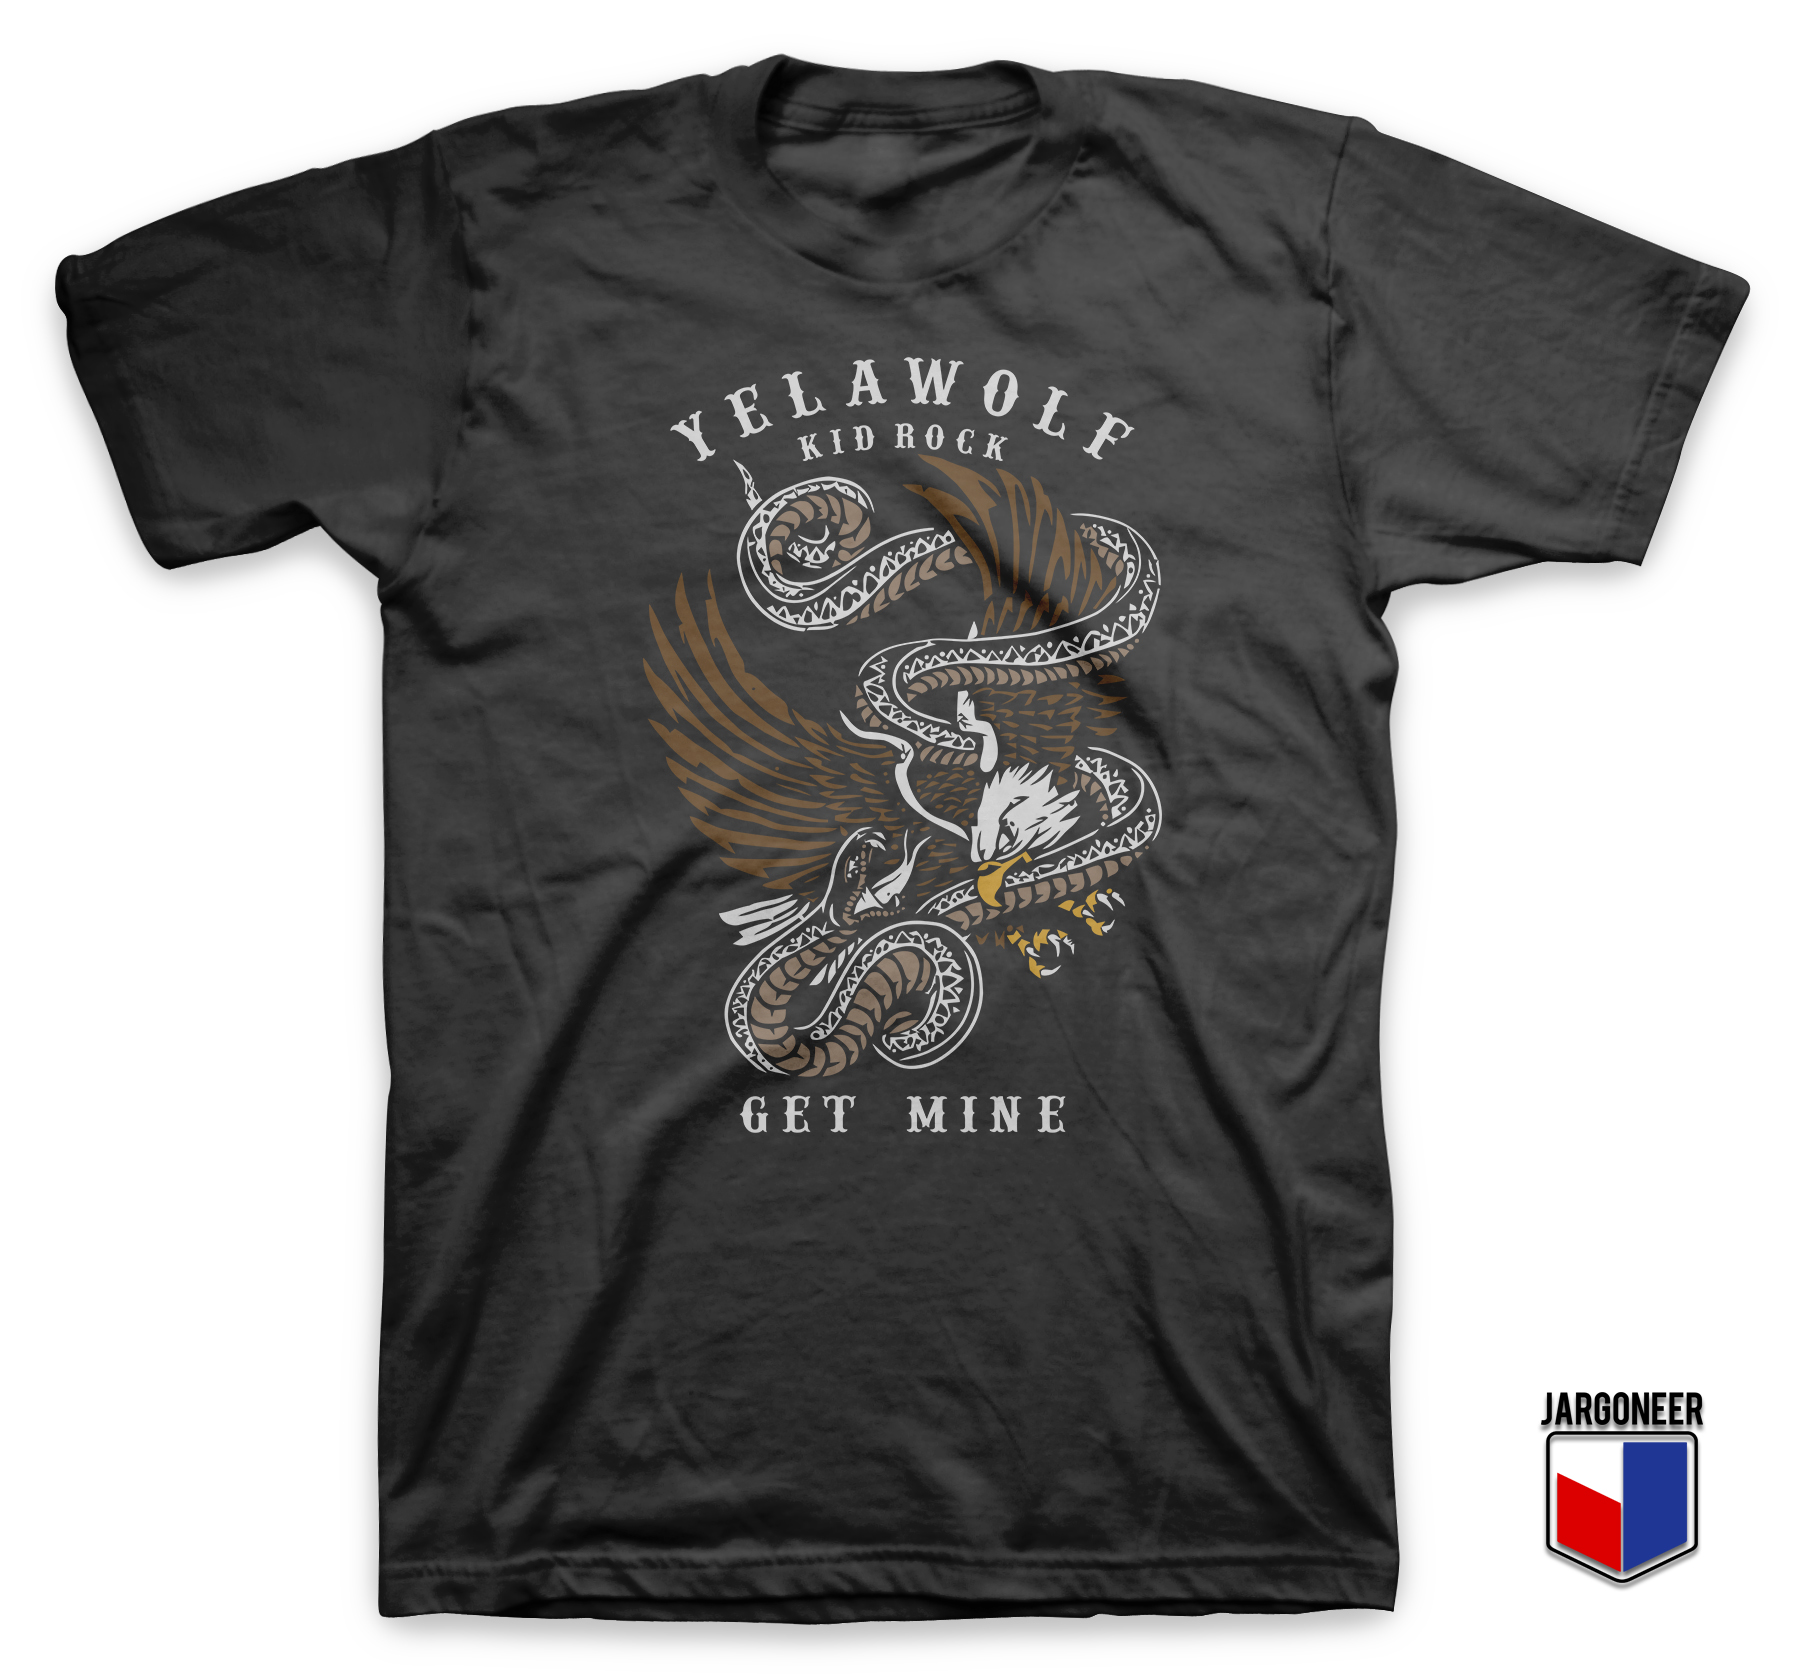 Yelawolf X Kid Rock Get Mine - Shop Unique Graphic Cool Shirt Designs